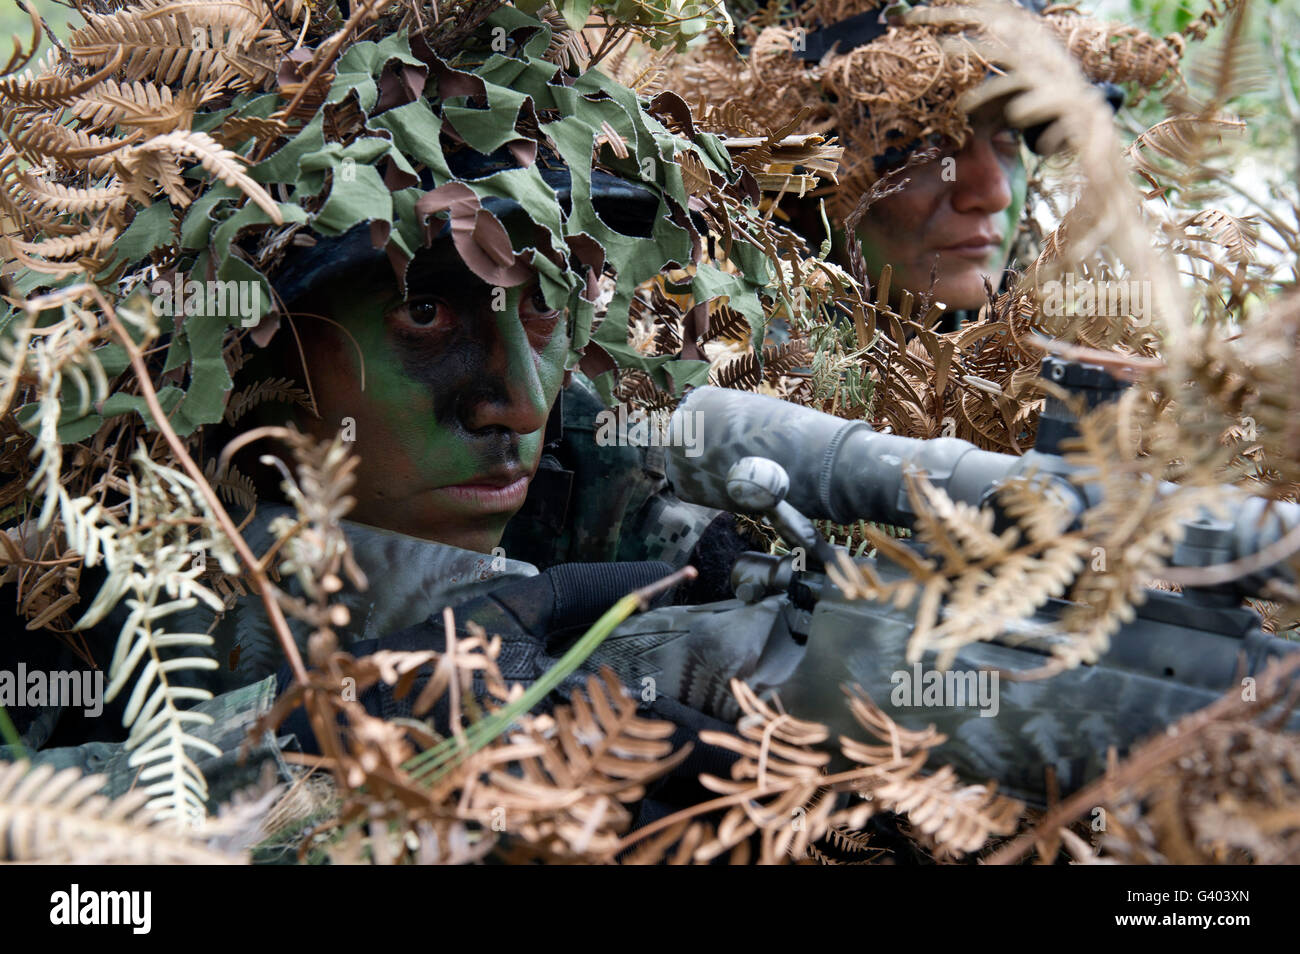 TIGRES commandos demonstrate their camouflage skills in Honduras. Stock Photo